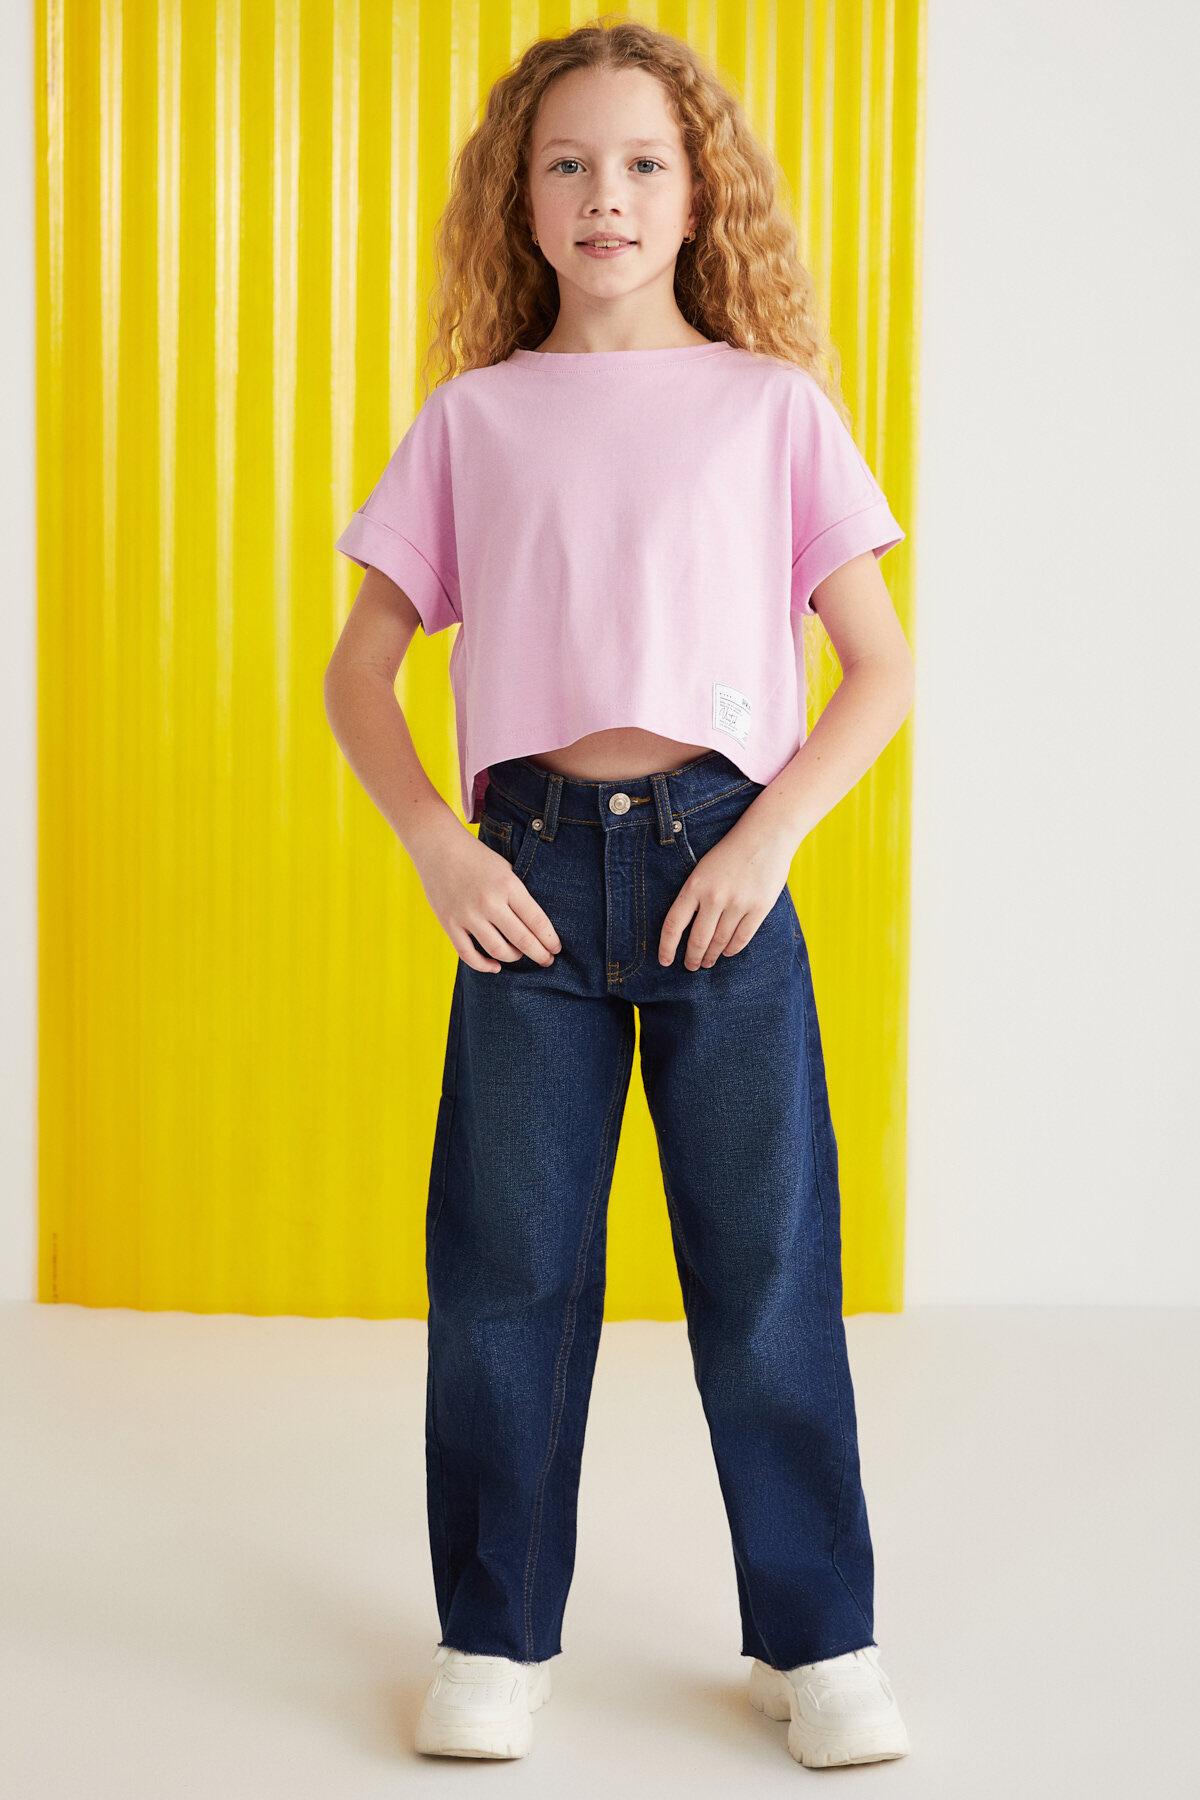 Levně GRIMELANGE Verena Girls' 100% Cotton Double Sleeve Pink T-shirt with Ornamental Labe